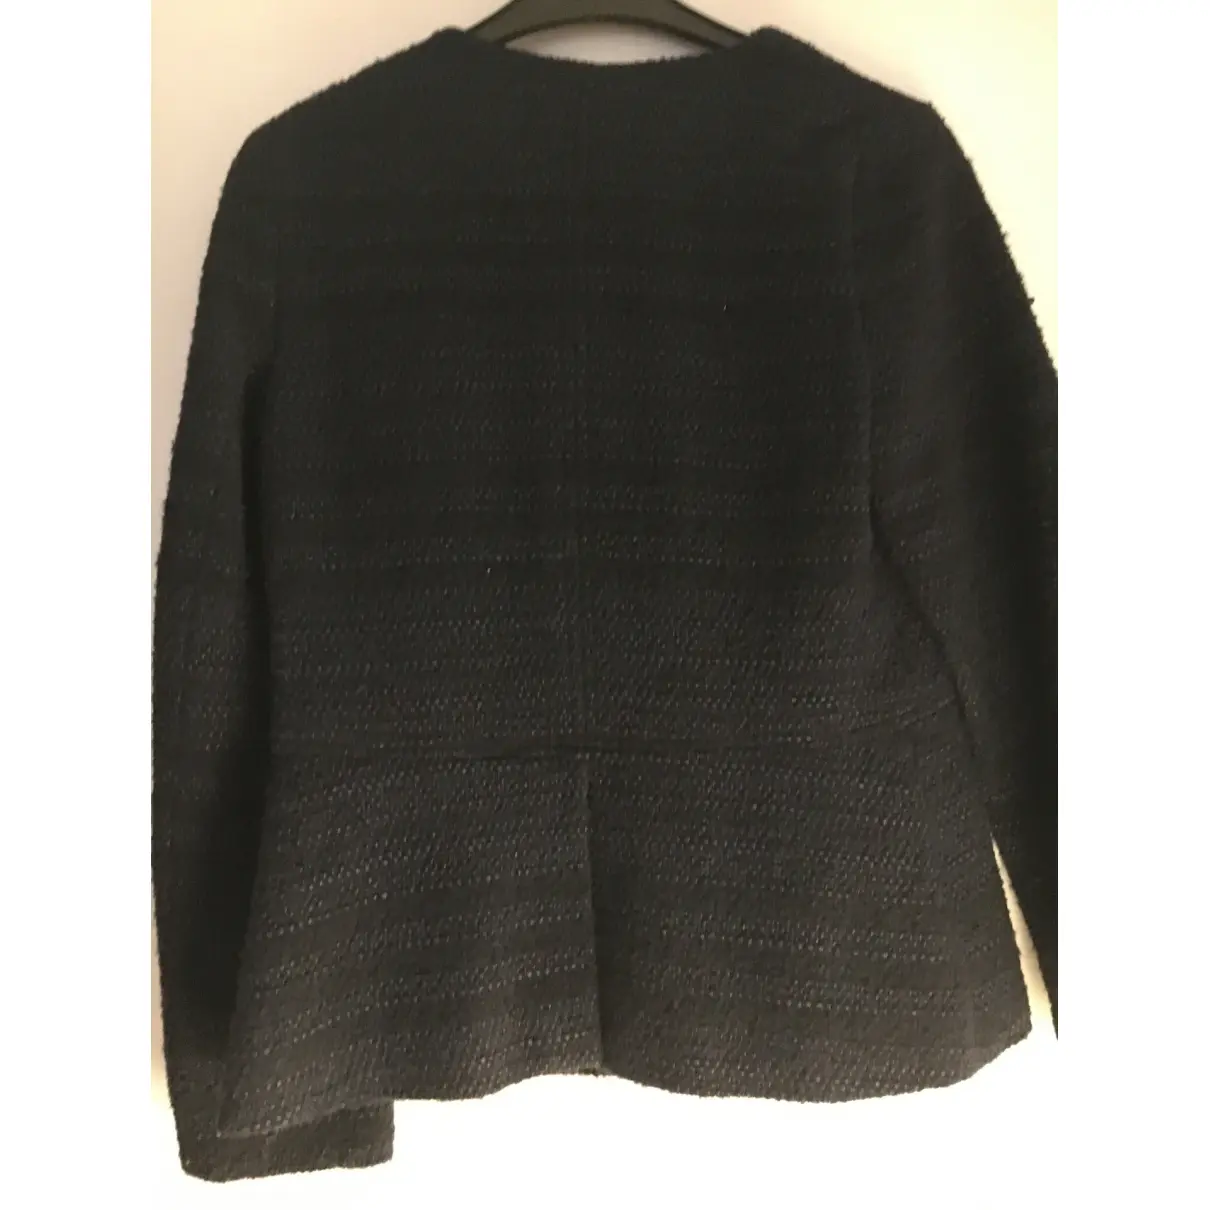 Buy Gerard Darel Tweed jacket online